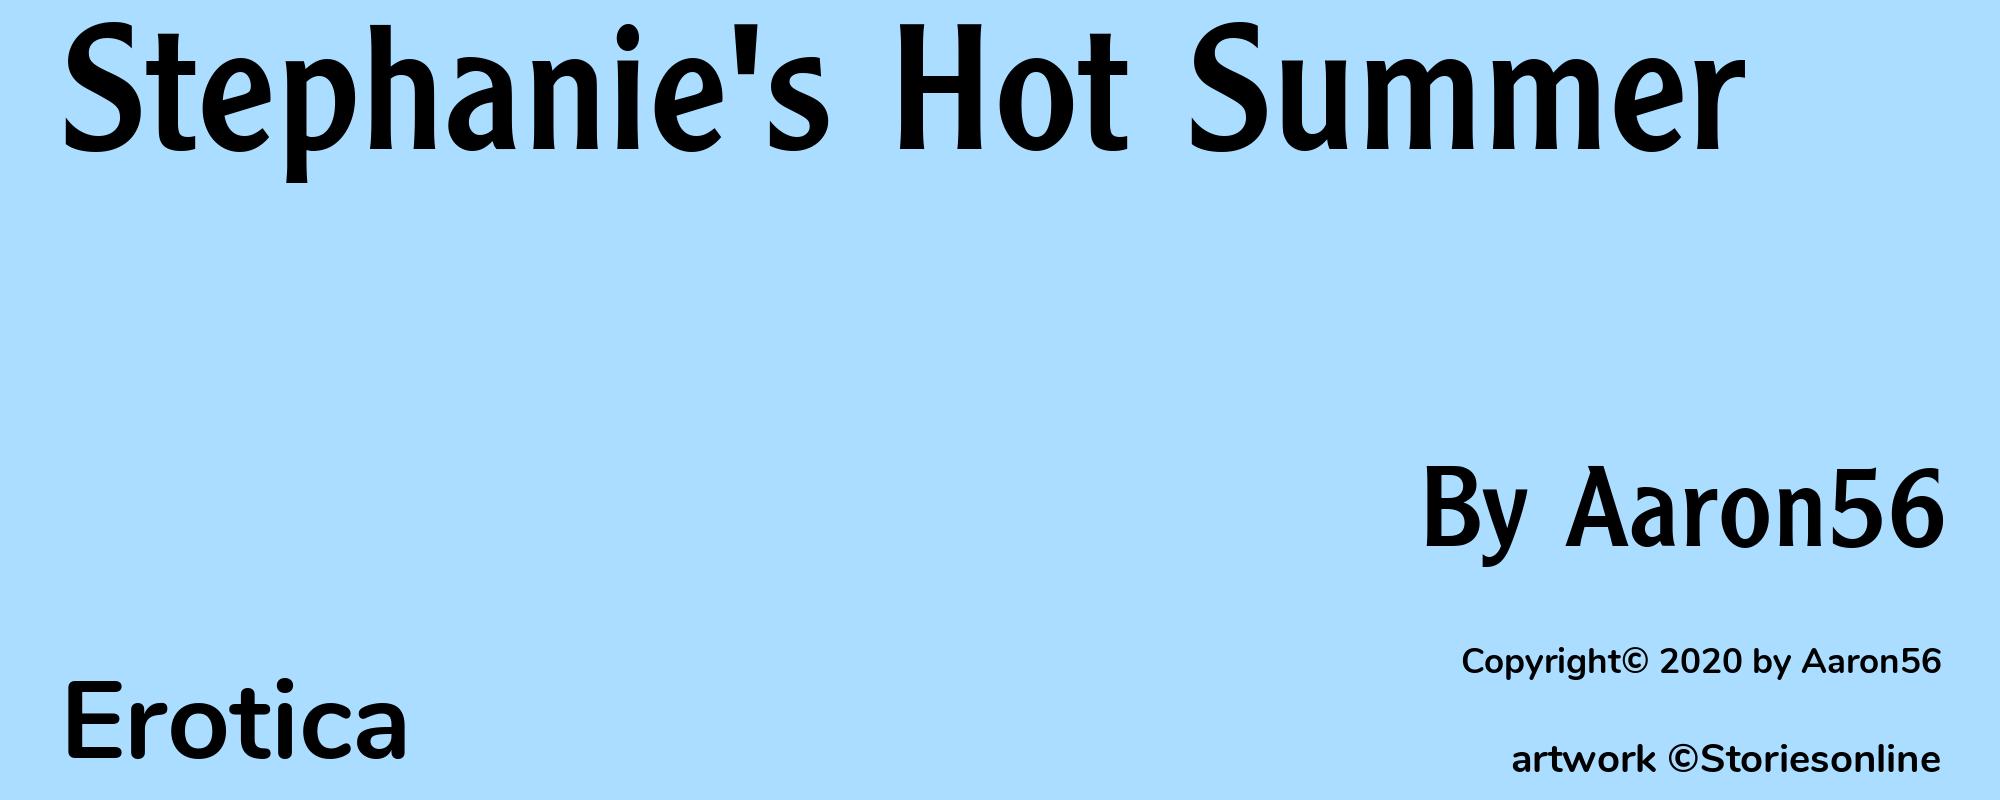 Stephanie's Hot Summer - Cover